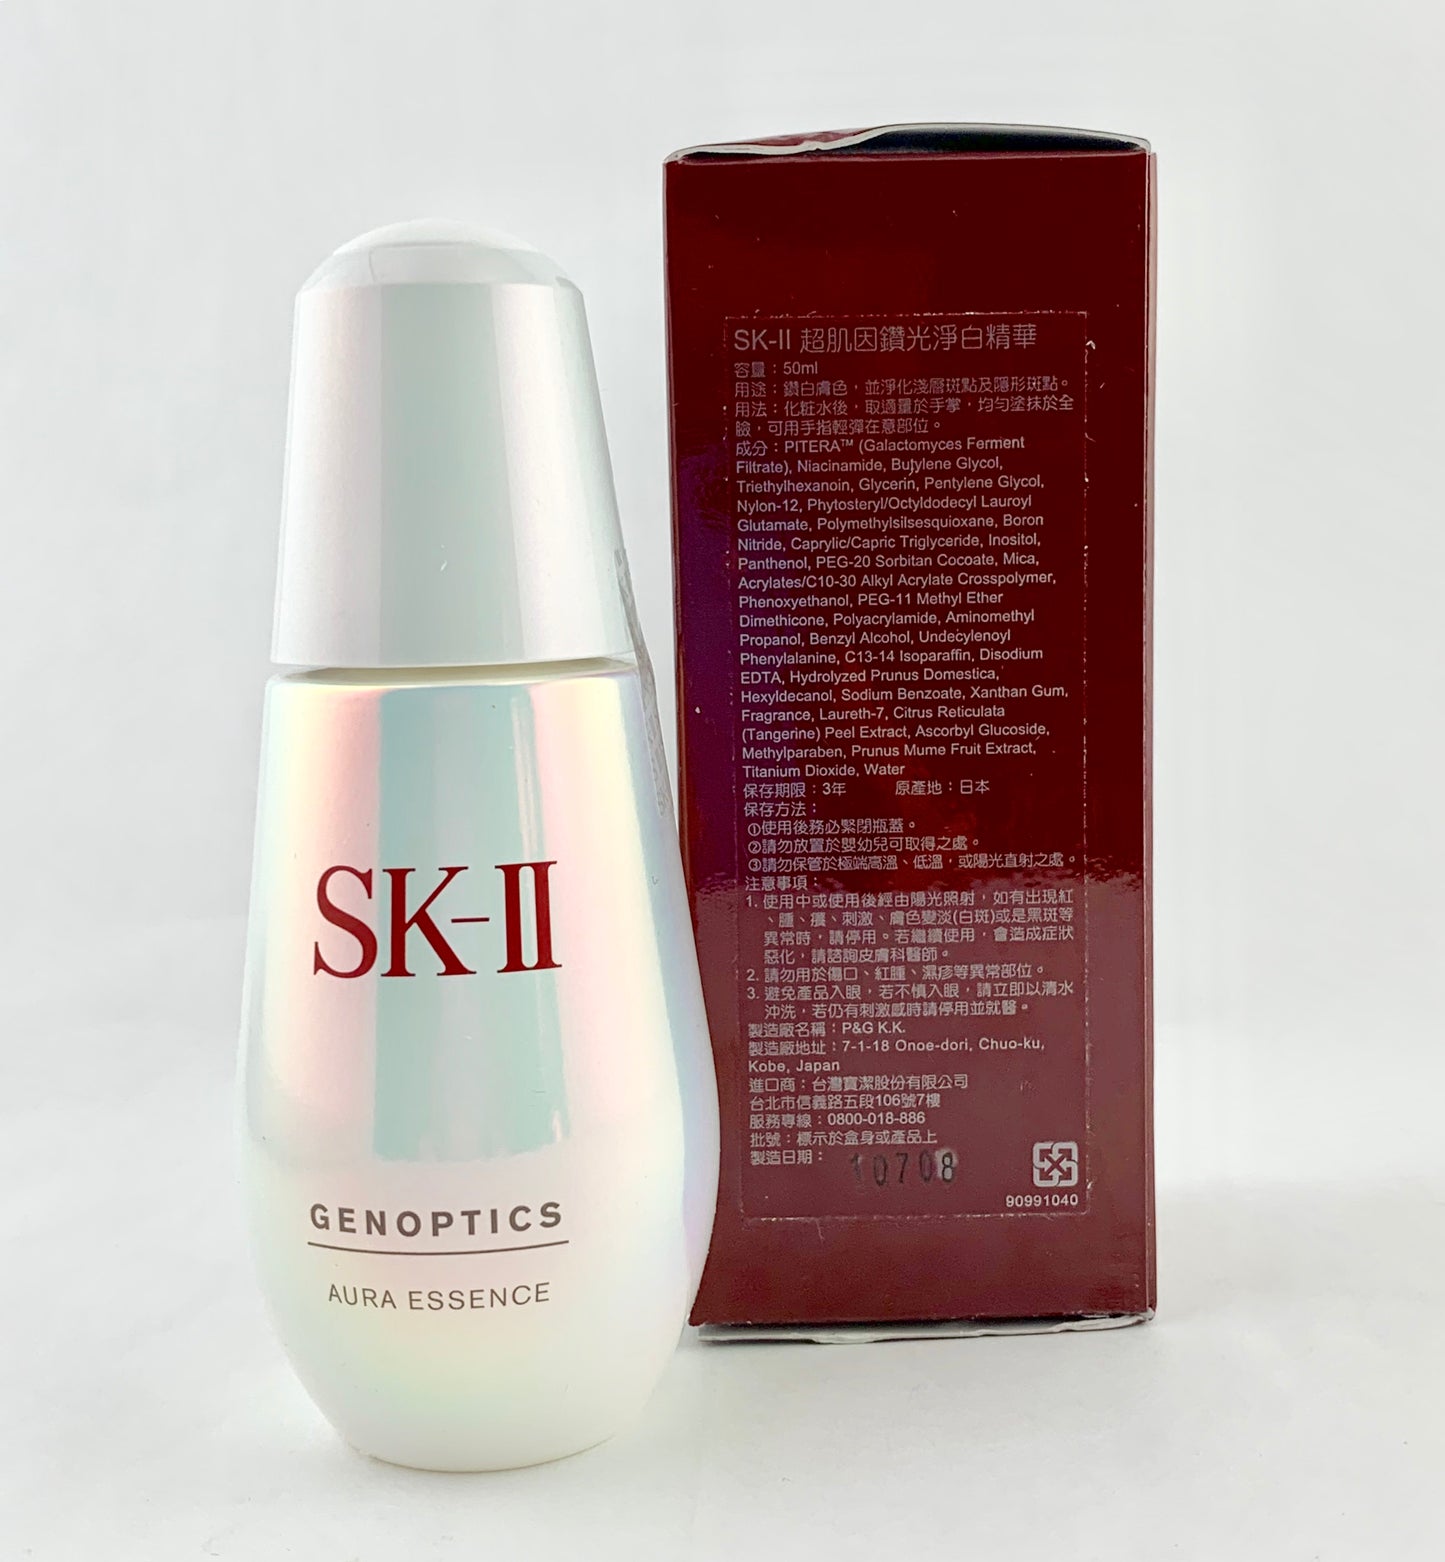 SK-II Genoptics Aura Essence (50ml/1.6oz) or (75ml/2.54oz) (Brightening, Whitening & Refining Skin Texture).